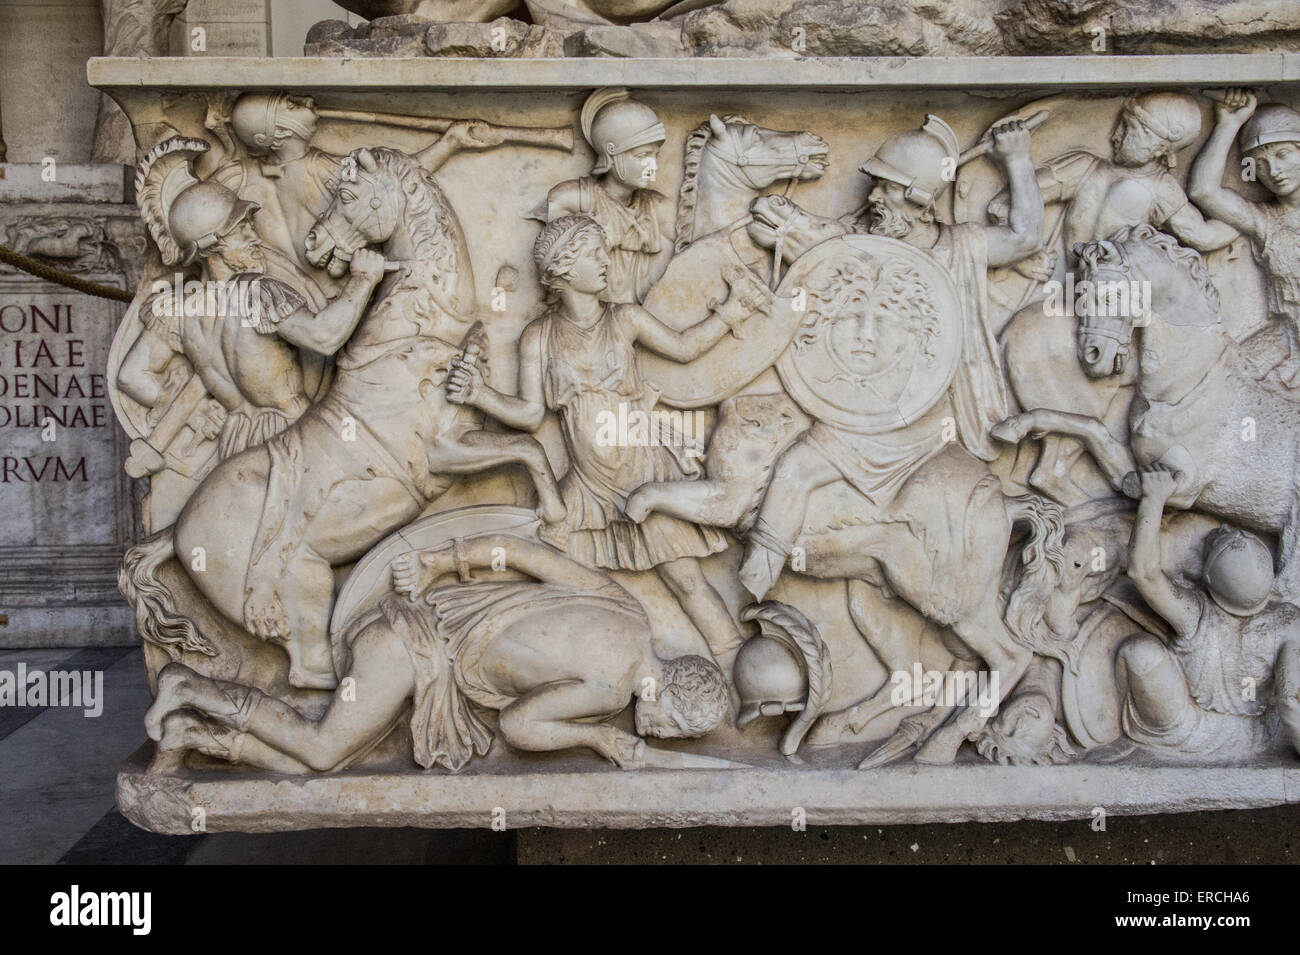 Ancient Roman battle scenes from the Sarcophagus of Saint Helen. Stock Photo